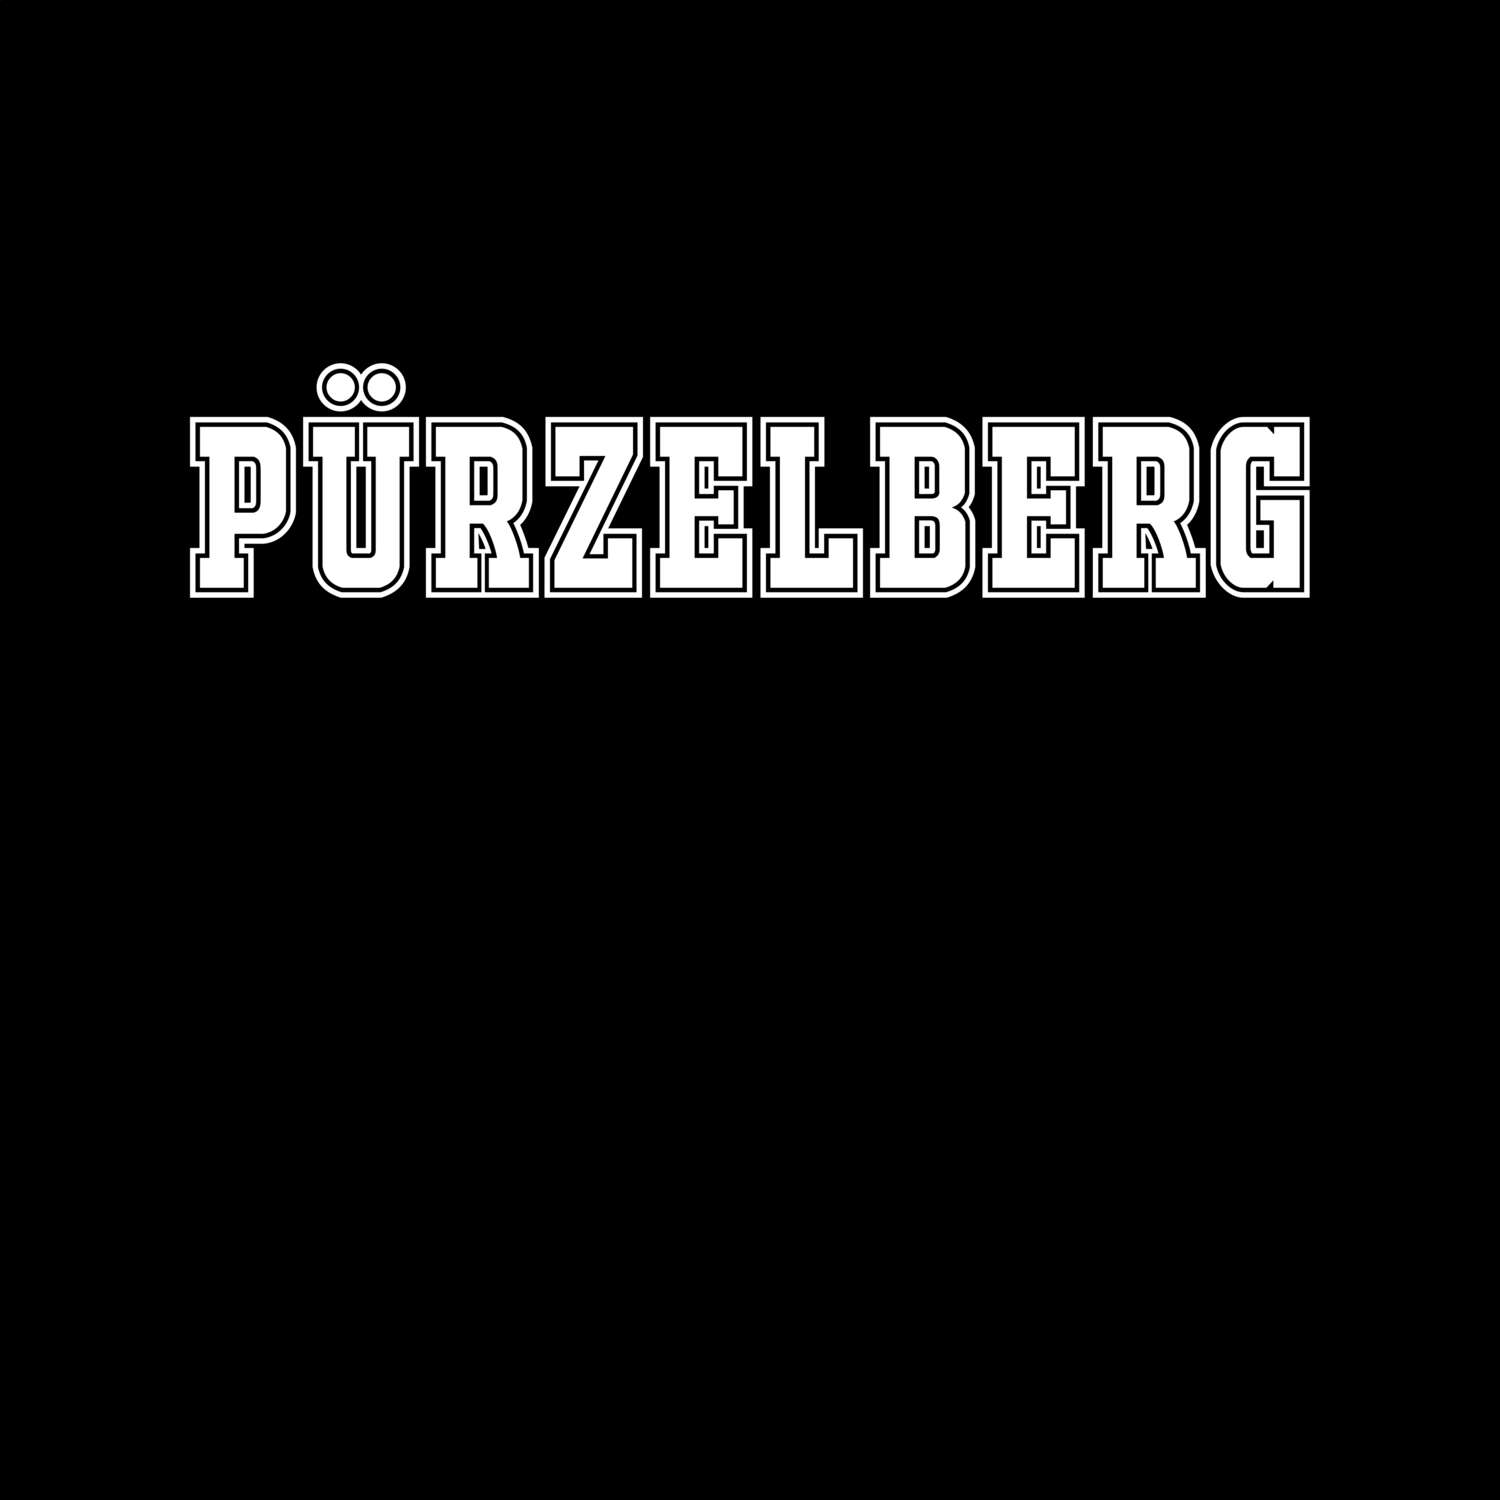 Pürzelberg T-Shirt »Classic«